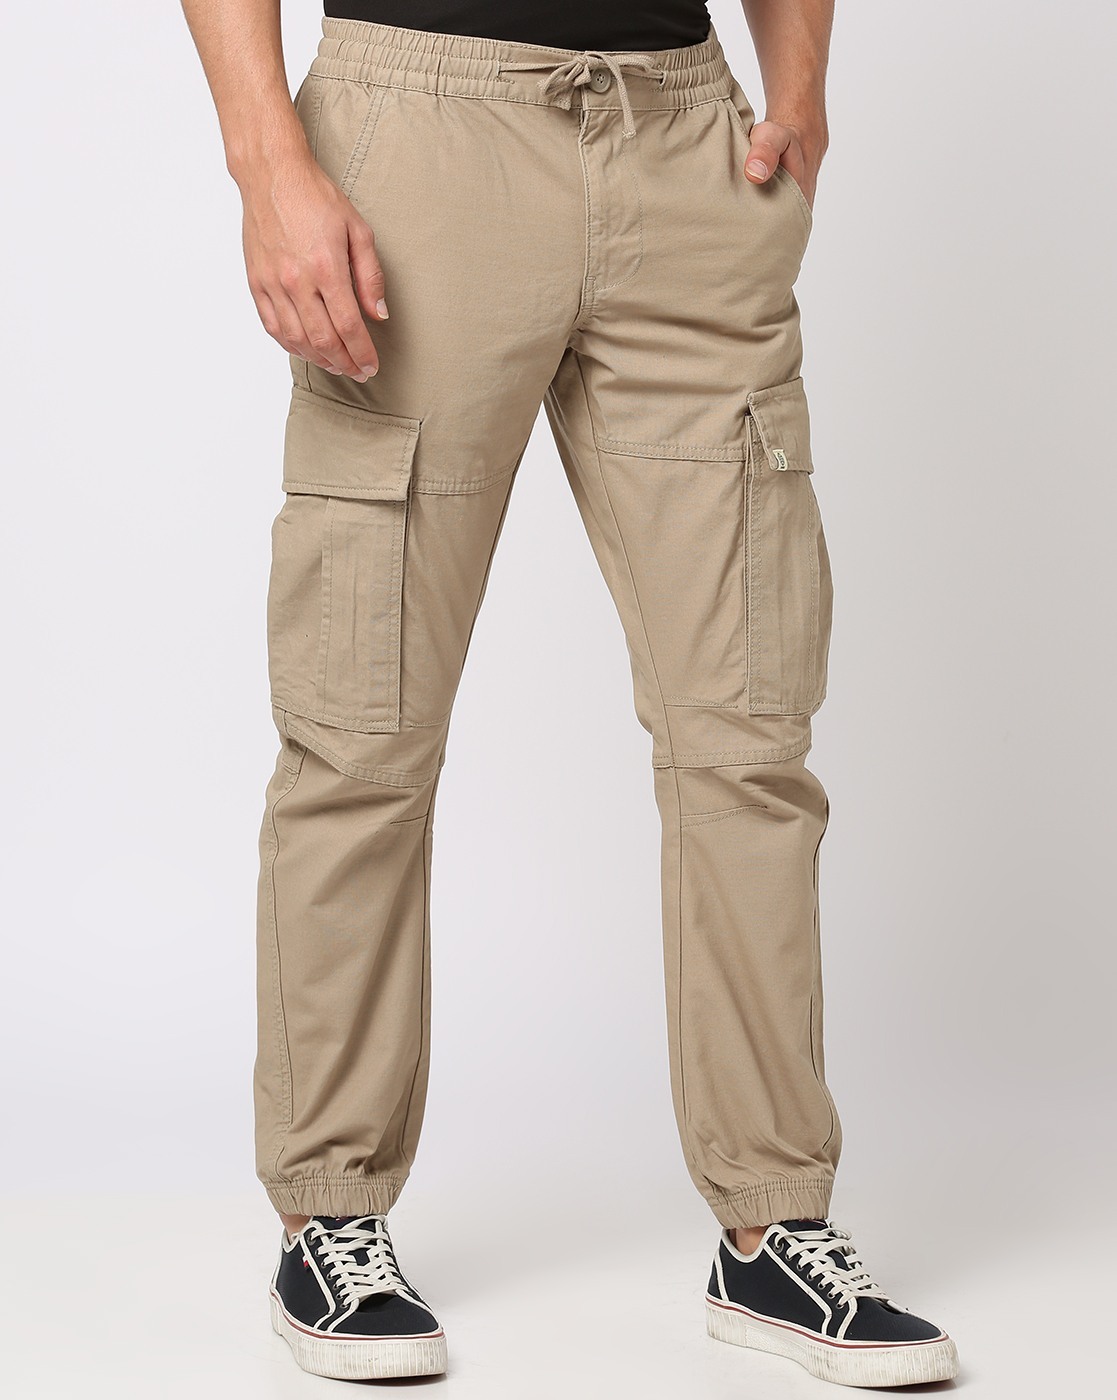 Men Cargo Pants Multi-pocket Military Tactical Joggers Cotton Male Casual  Trousers Plus Size Khaki Black Army Pantalon Militaire - Cargo Pants -  AliExpress